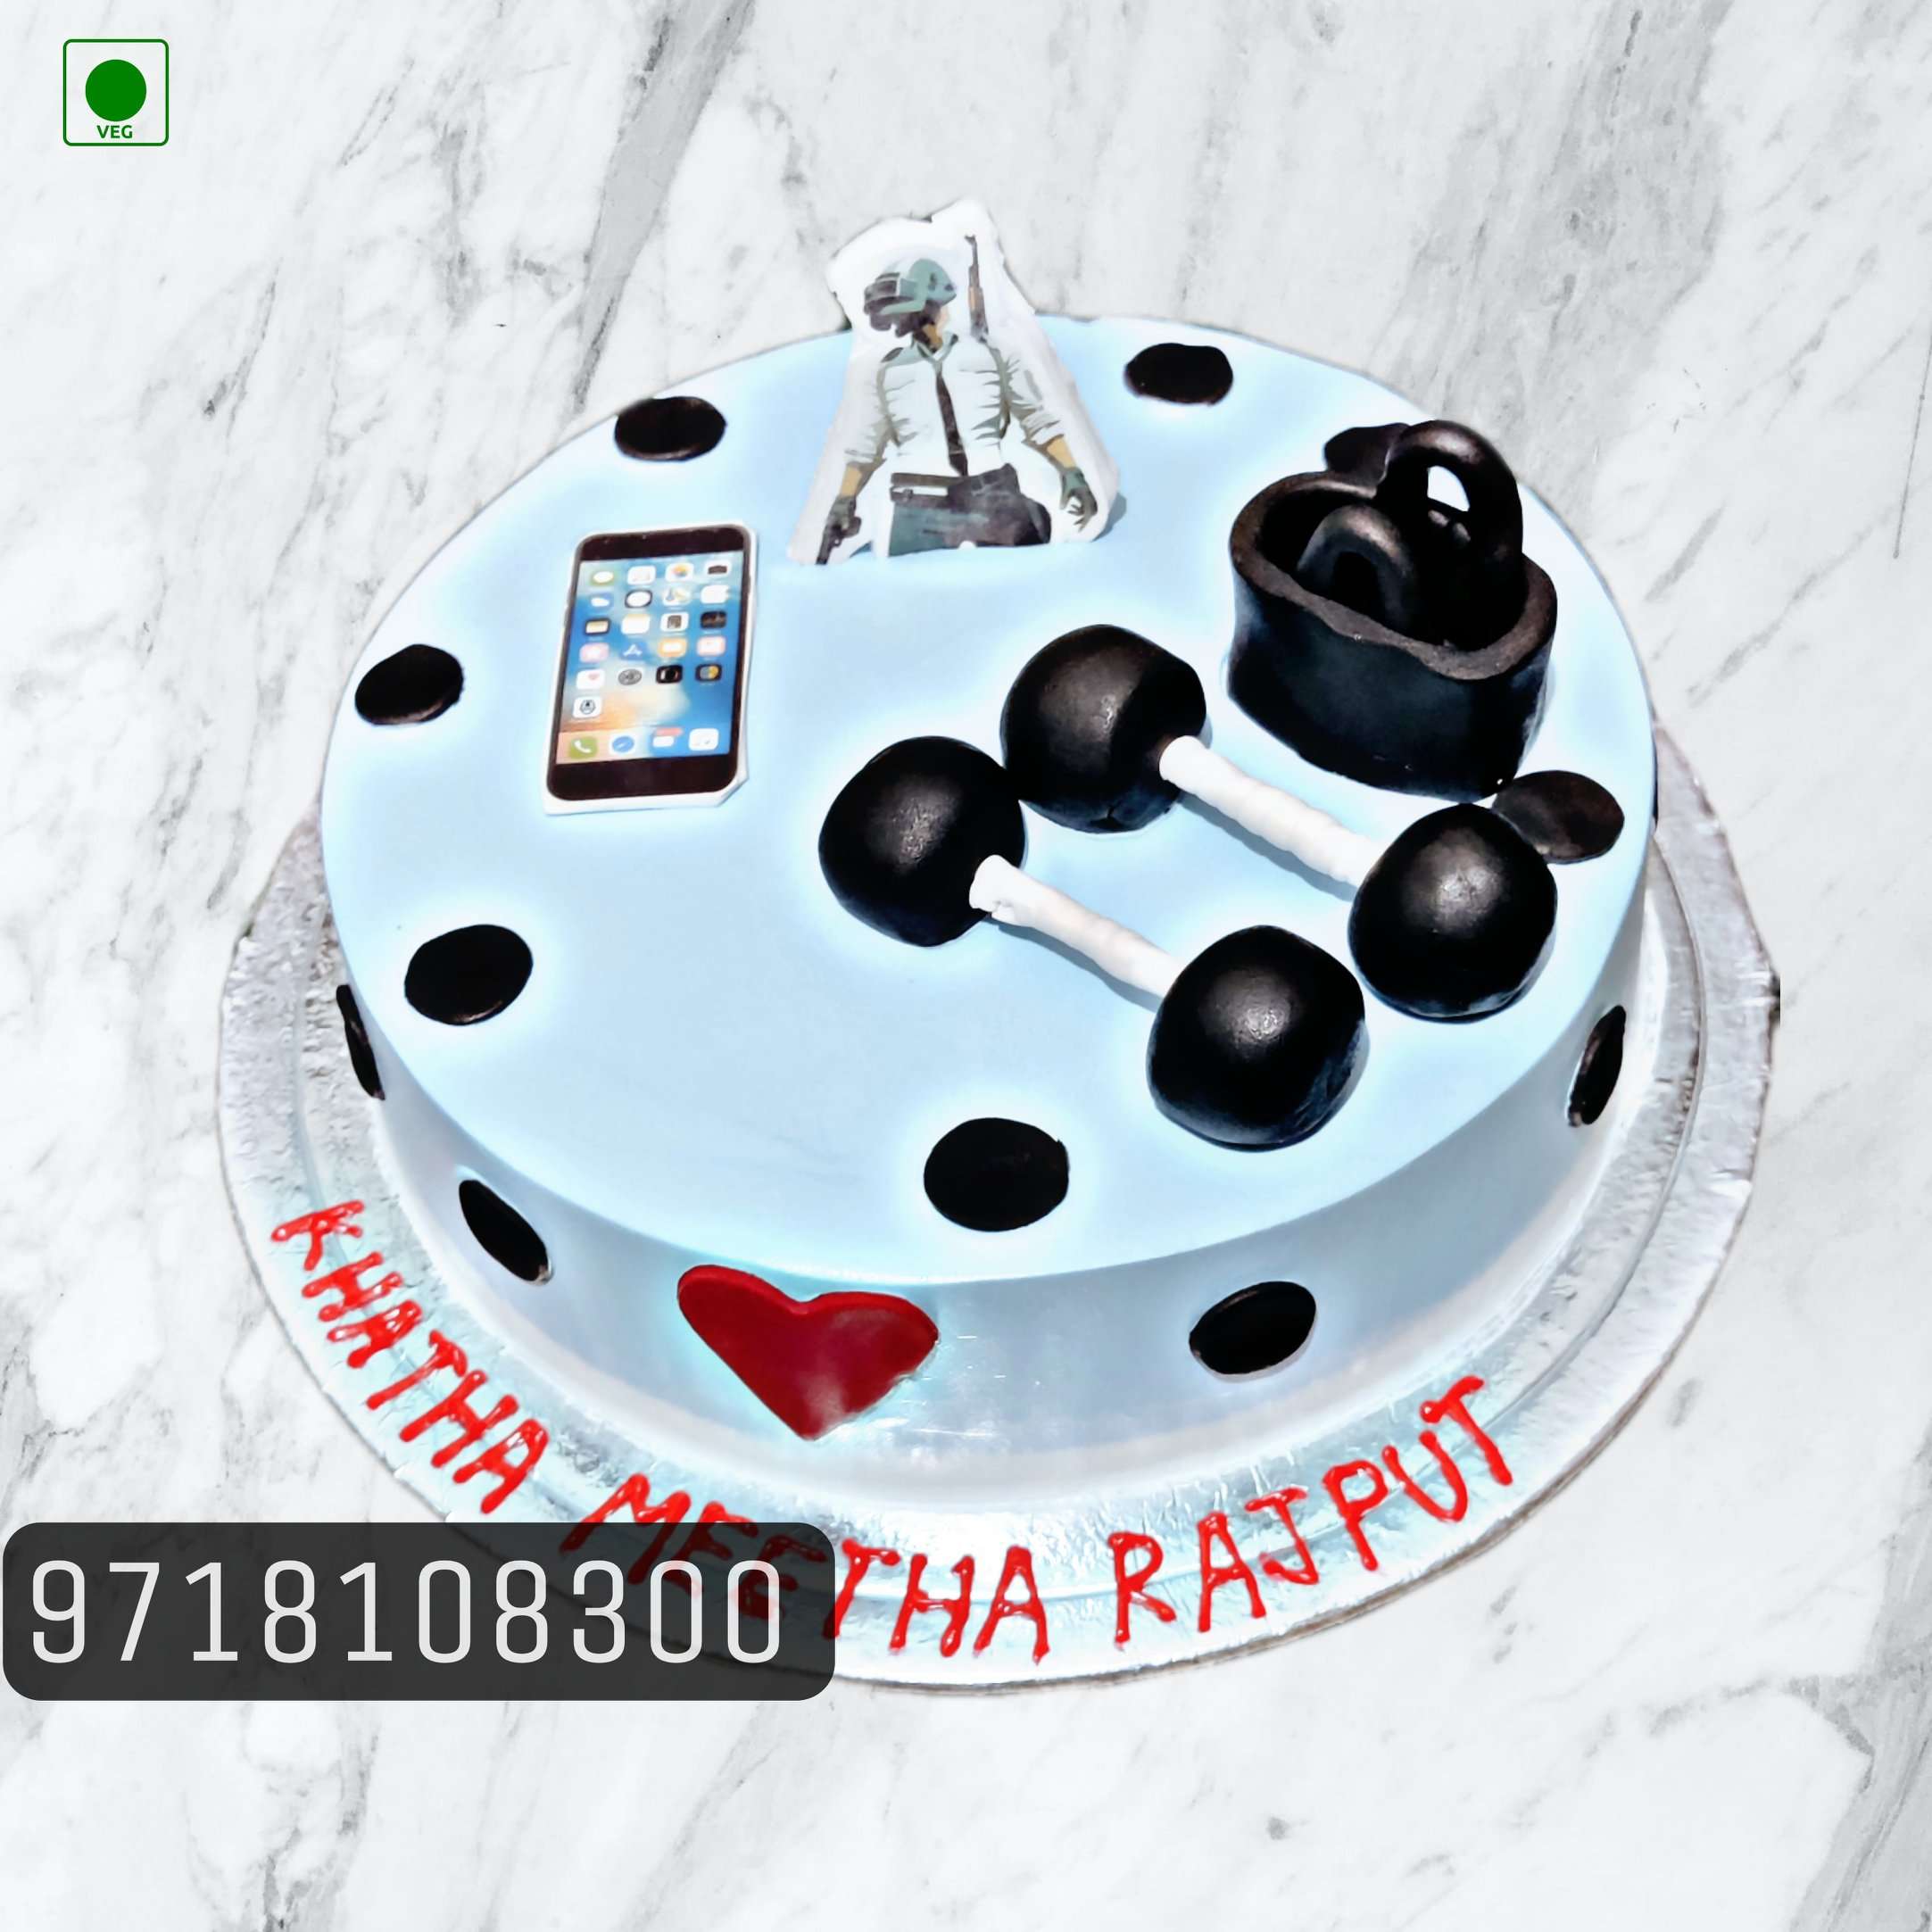 Celebration Cake || Online Cake delivery in Kathmandu || Online Cake order  in Kathmandu || Order cake online in Kathmandu|| Birthday Cake in Nepal ||  Best Cakes in Kathmandu